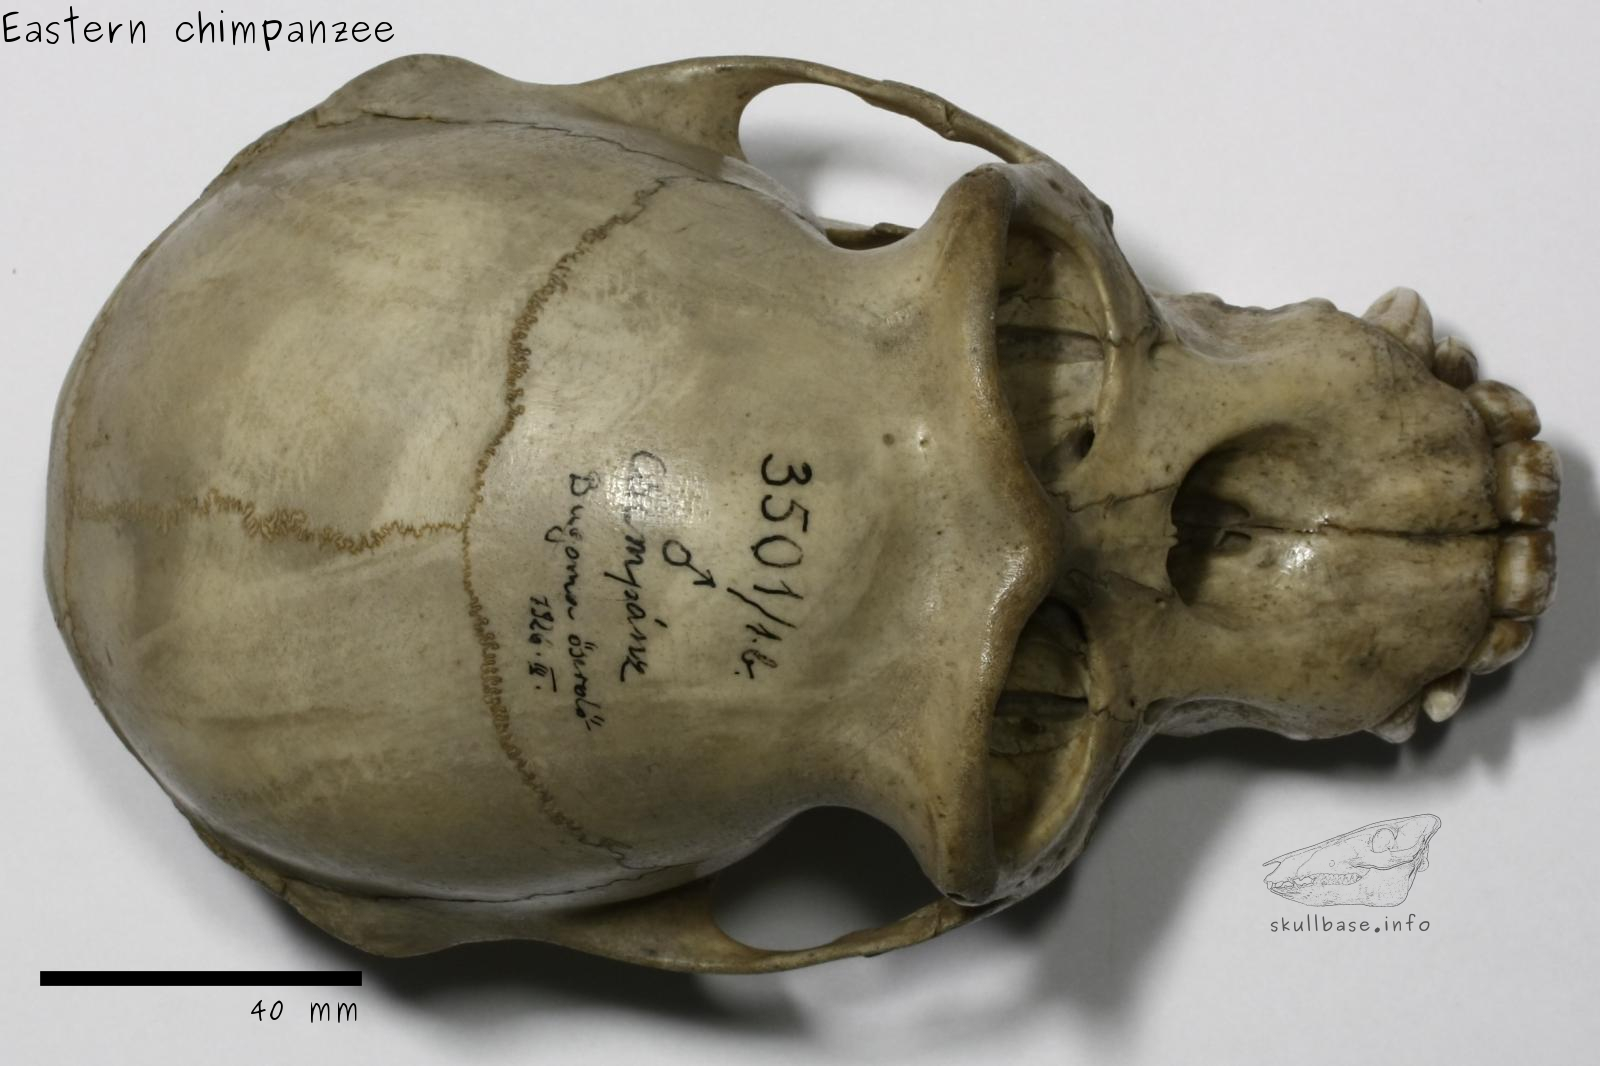 Eastern chimpanzee (Pan troglodytes schweinfurthii) skull dorsal view